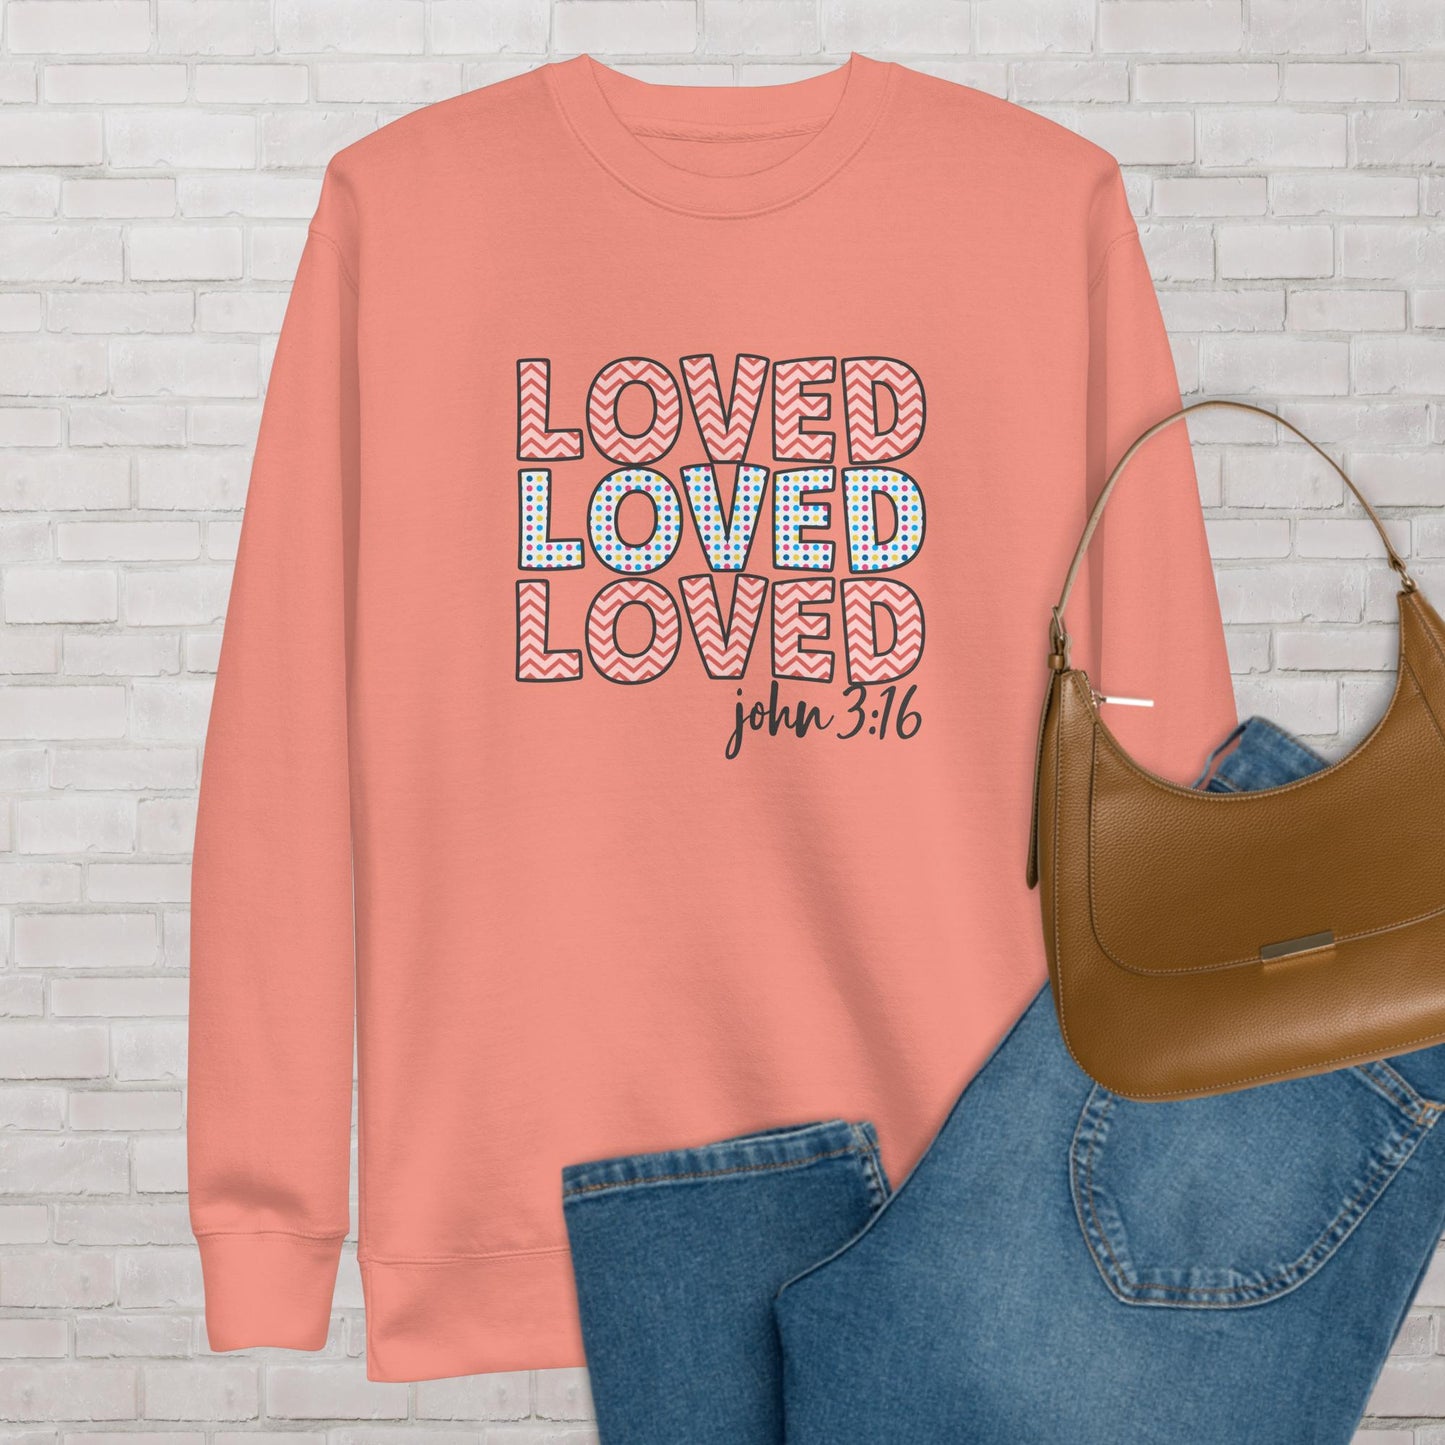 LOVED John 3:16 Sweatshirt